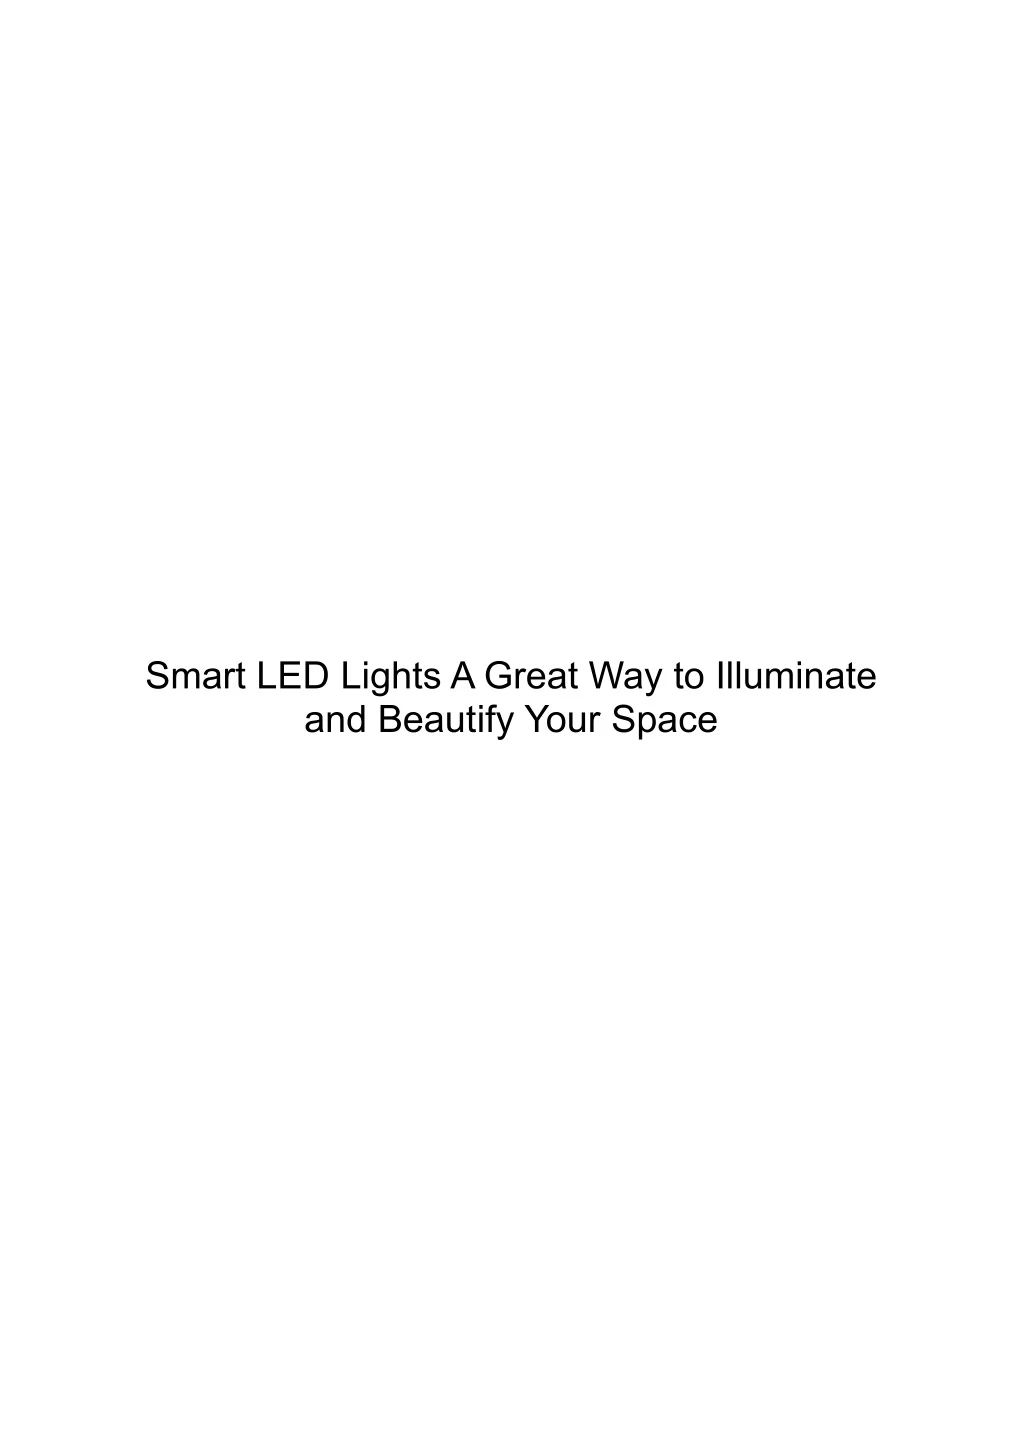 smart led lights a great way to illuminate